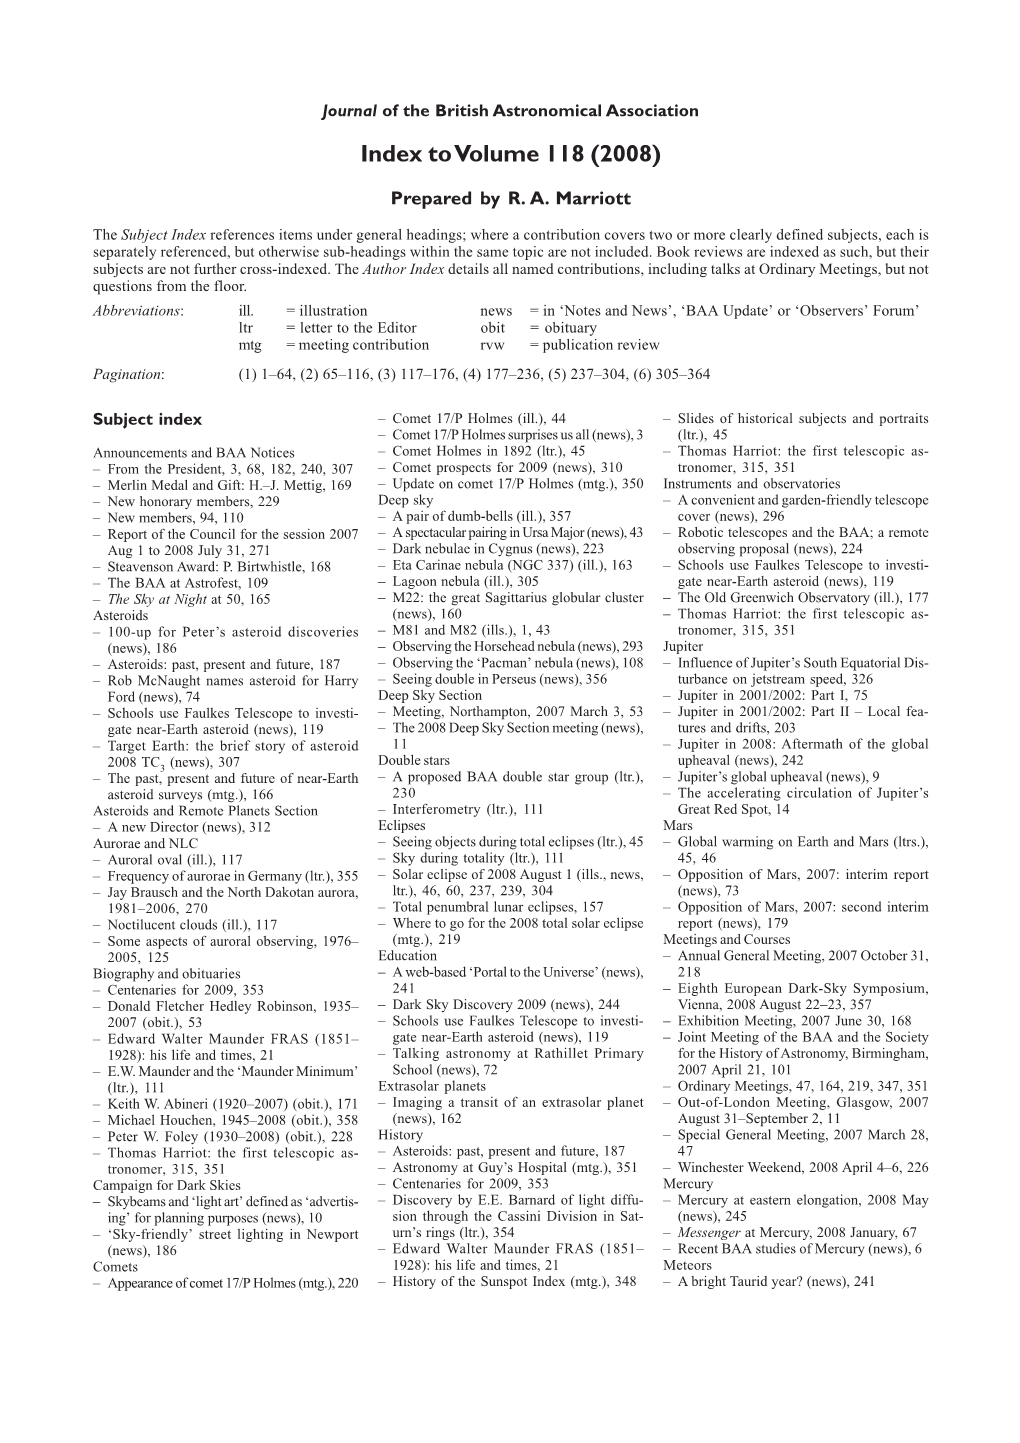 Index to Volume 118 (2008)